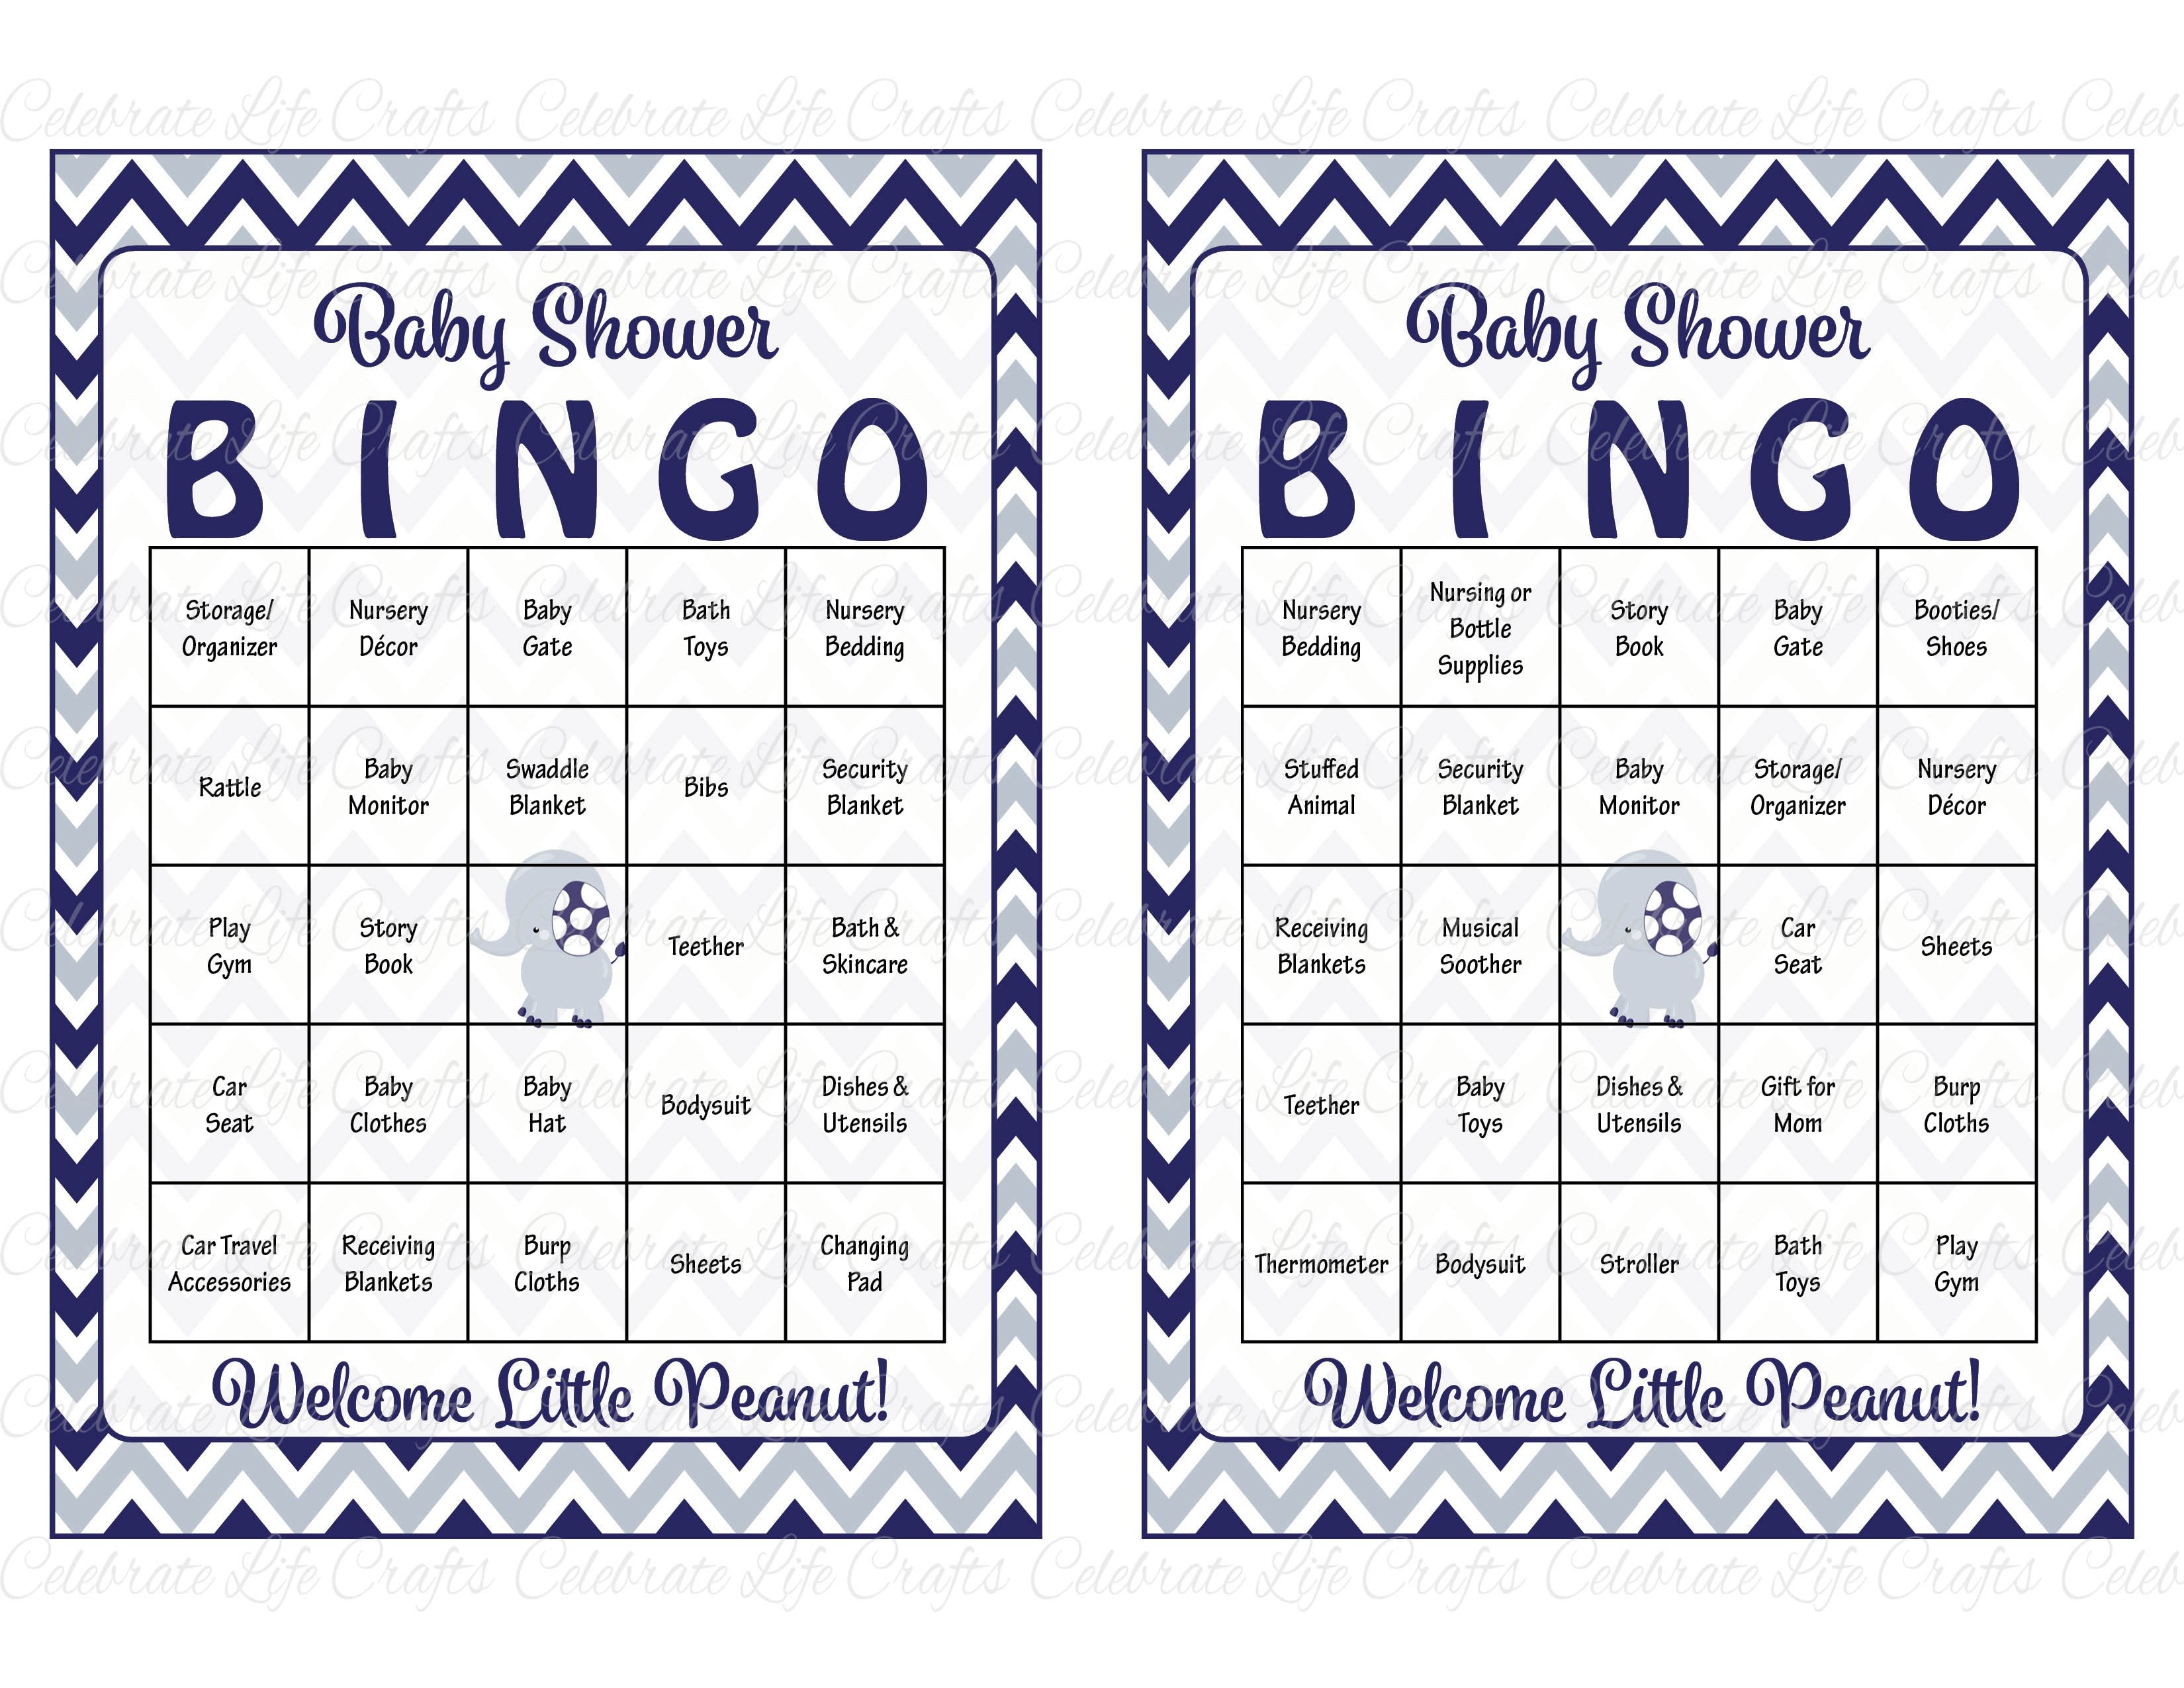 elephant-baby-shower-game-download-for-boy-baby-bingo-celebrate